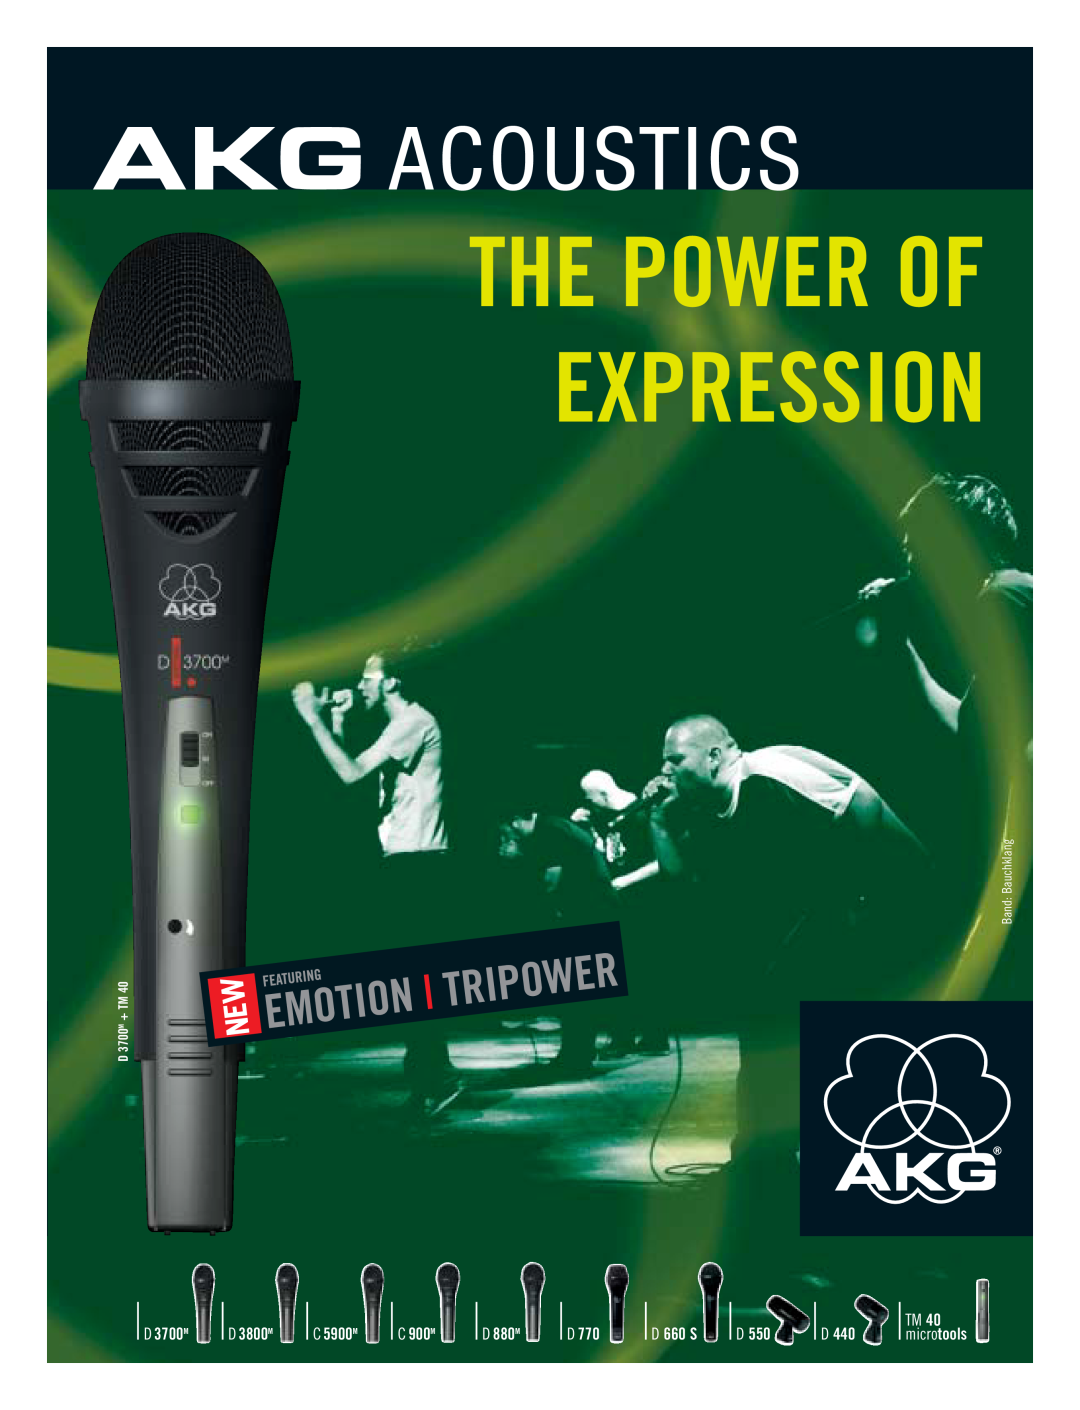 AKG Acoustics D3700M manual D 3700M, D 3800M, C 5900M, C 900M, D 880M, D 660 S, Expression, The Power Of, Band Bauchklang 